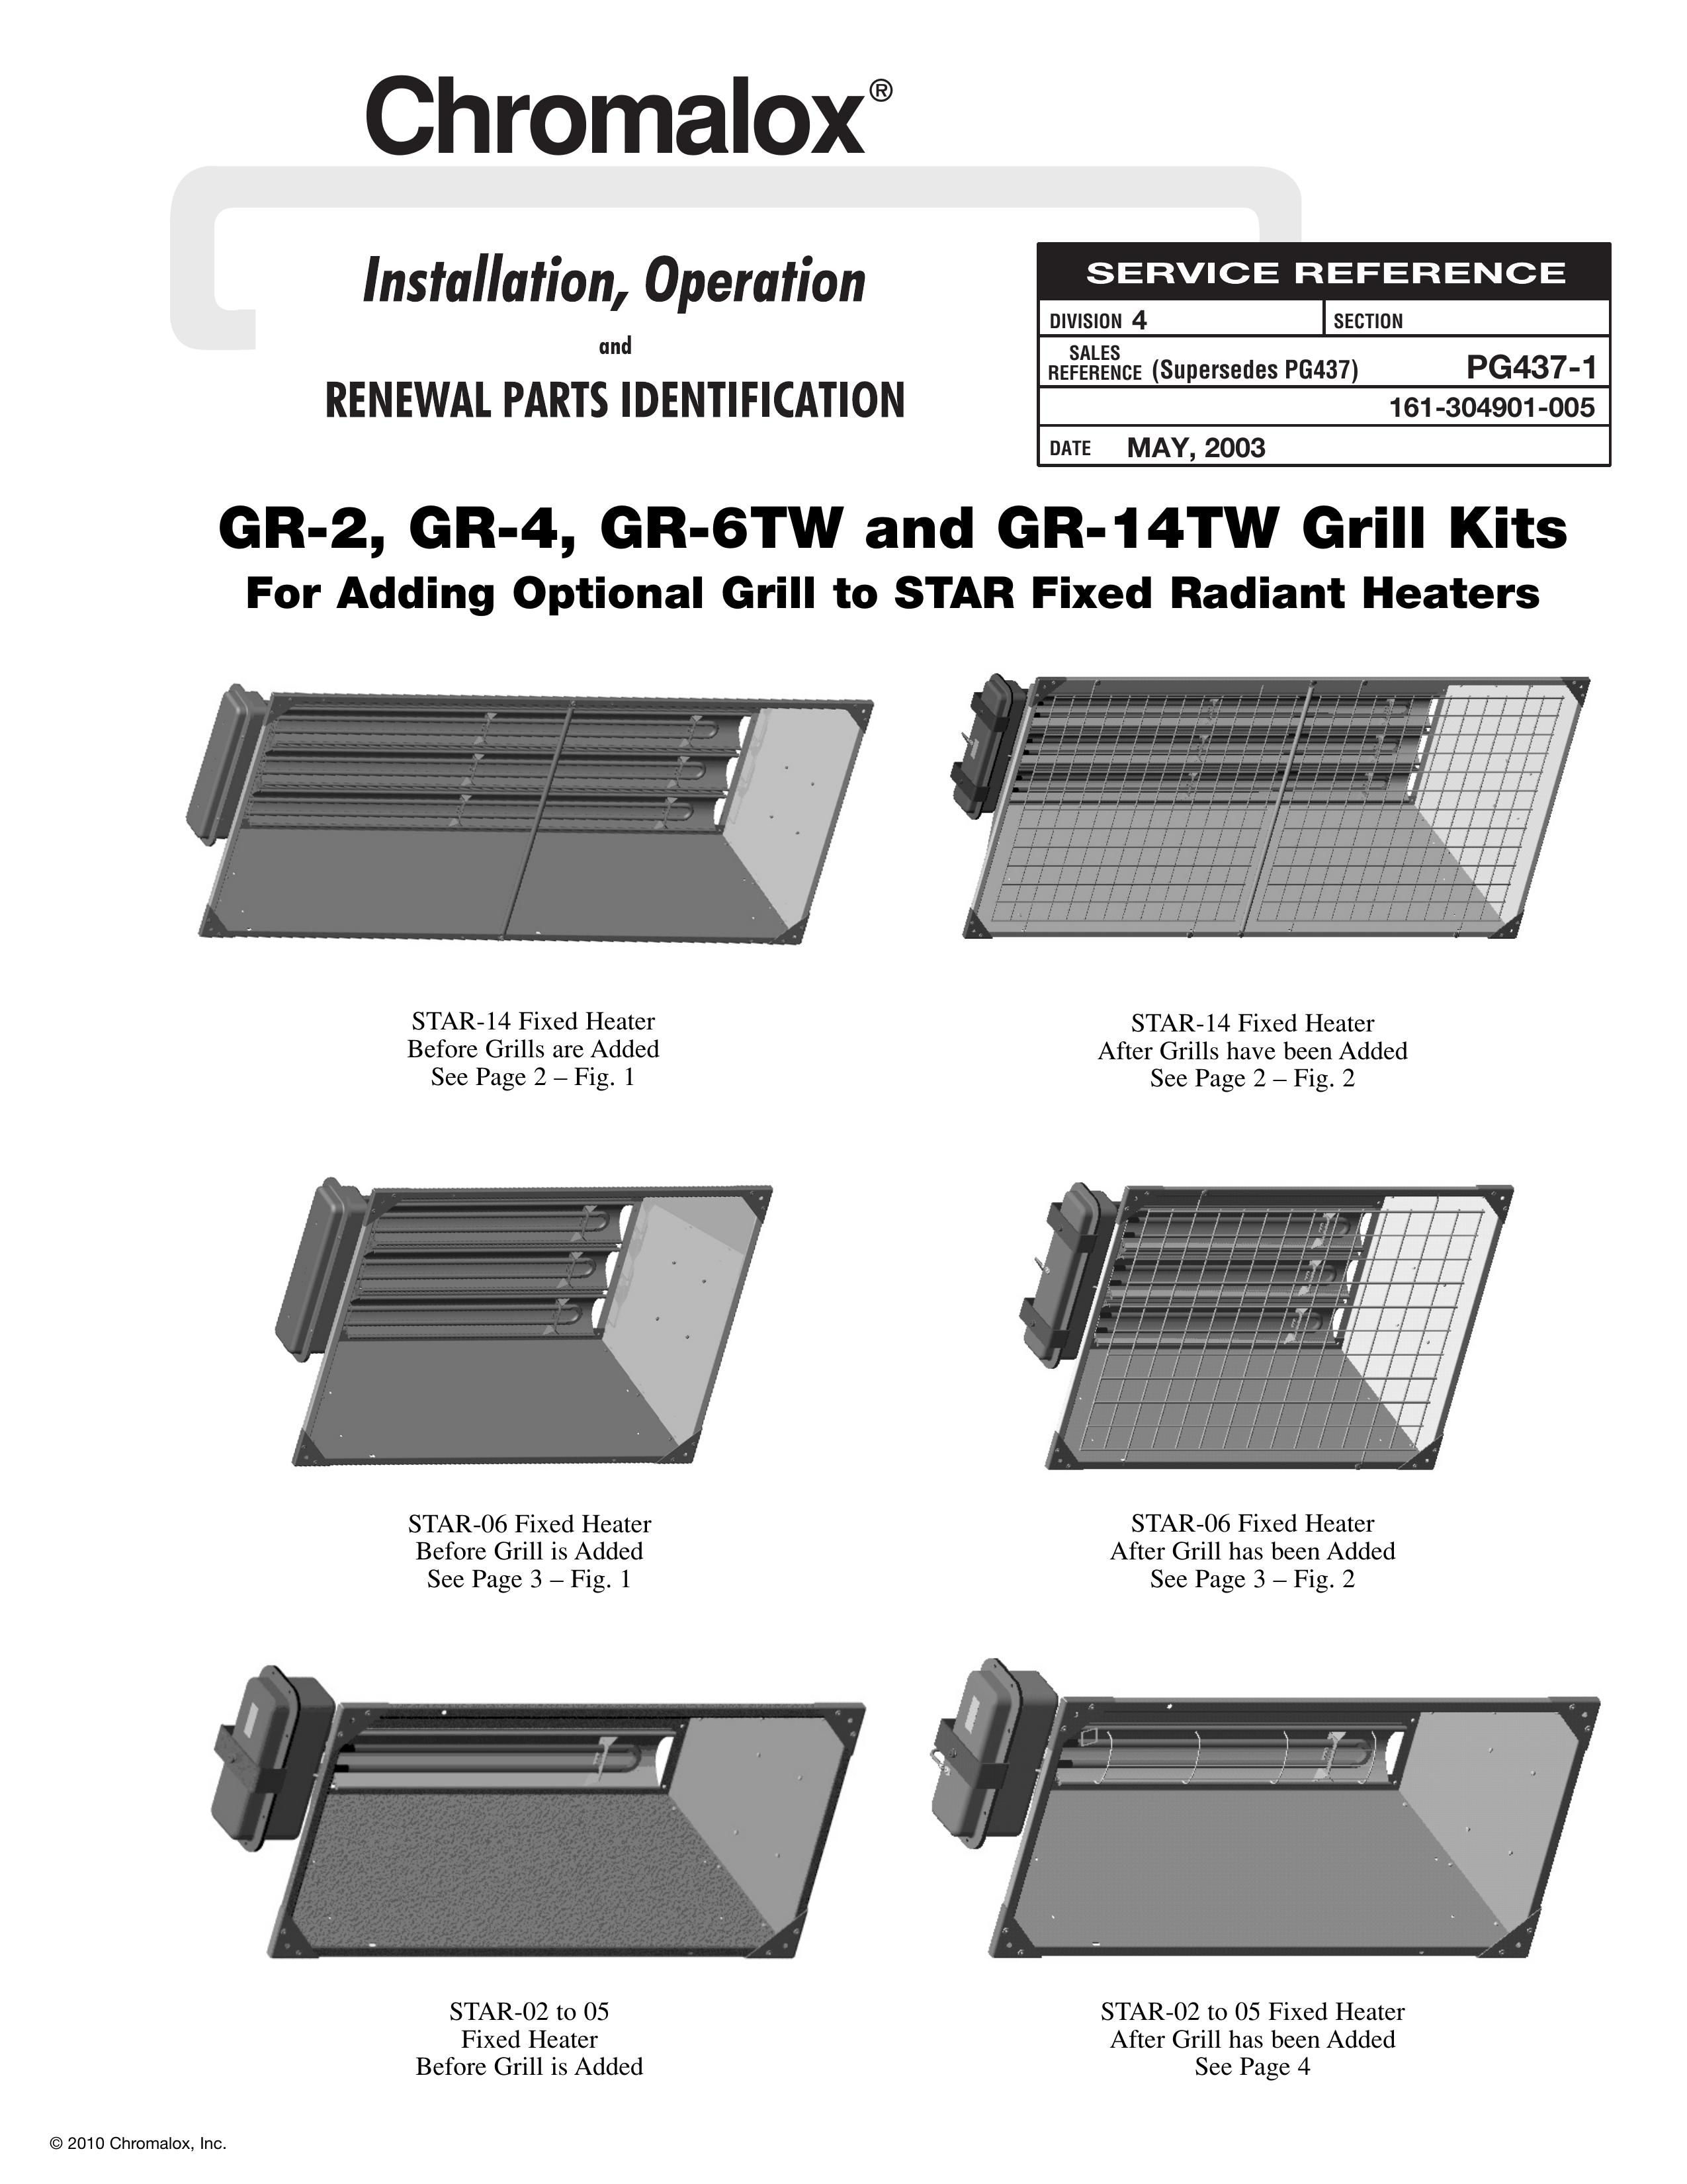 Chromalox GR-14TW Grill Accessory User Manual